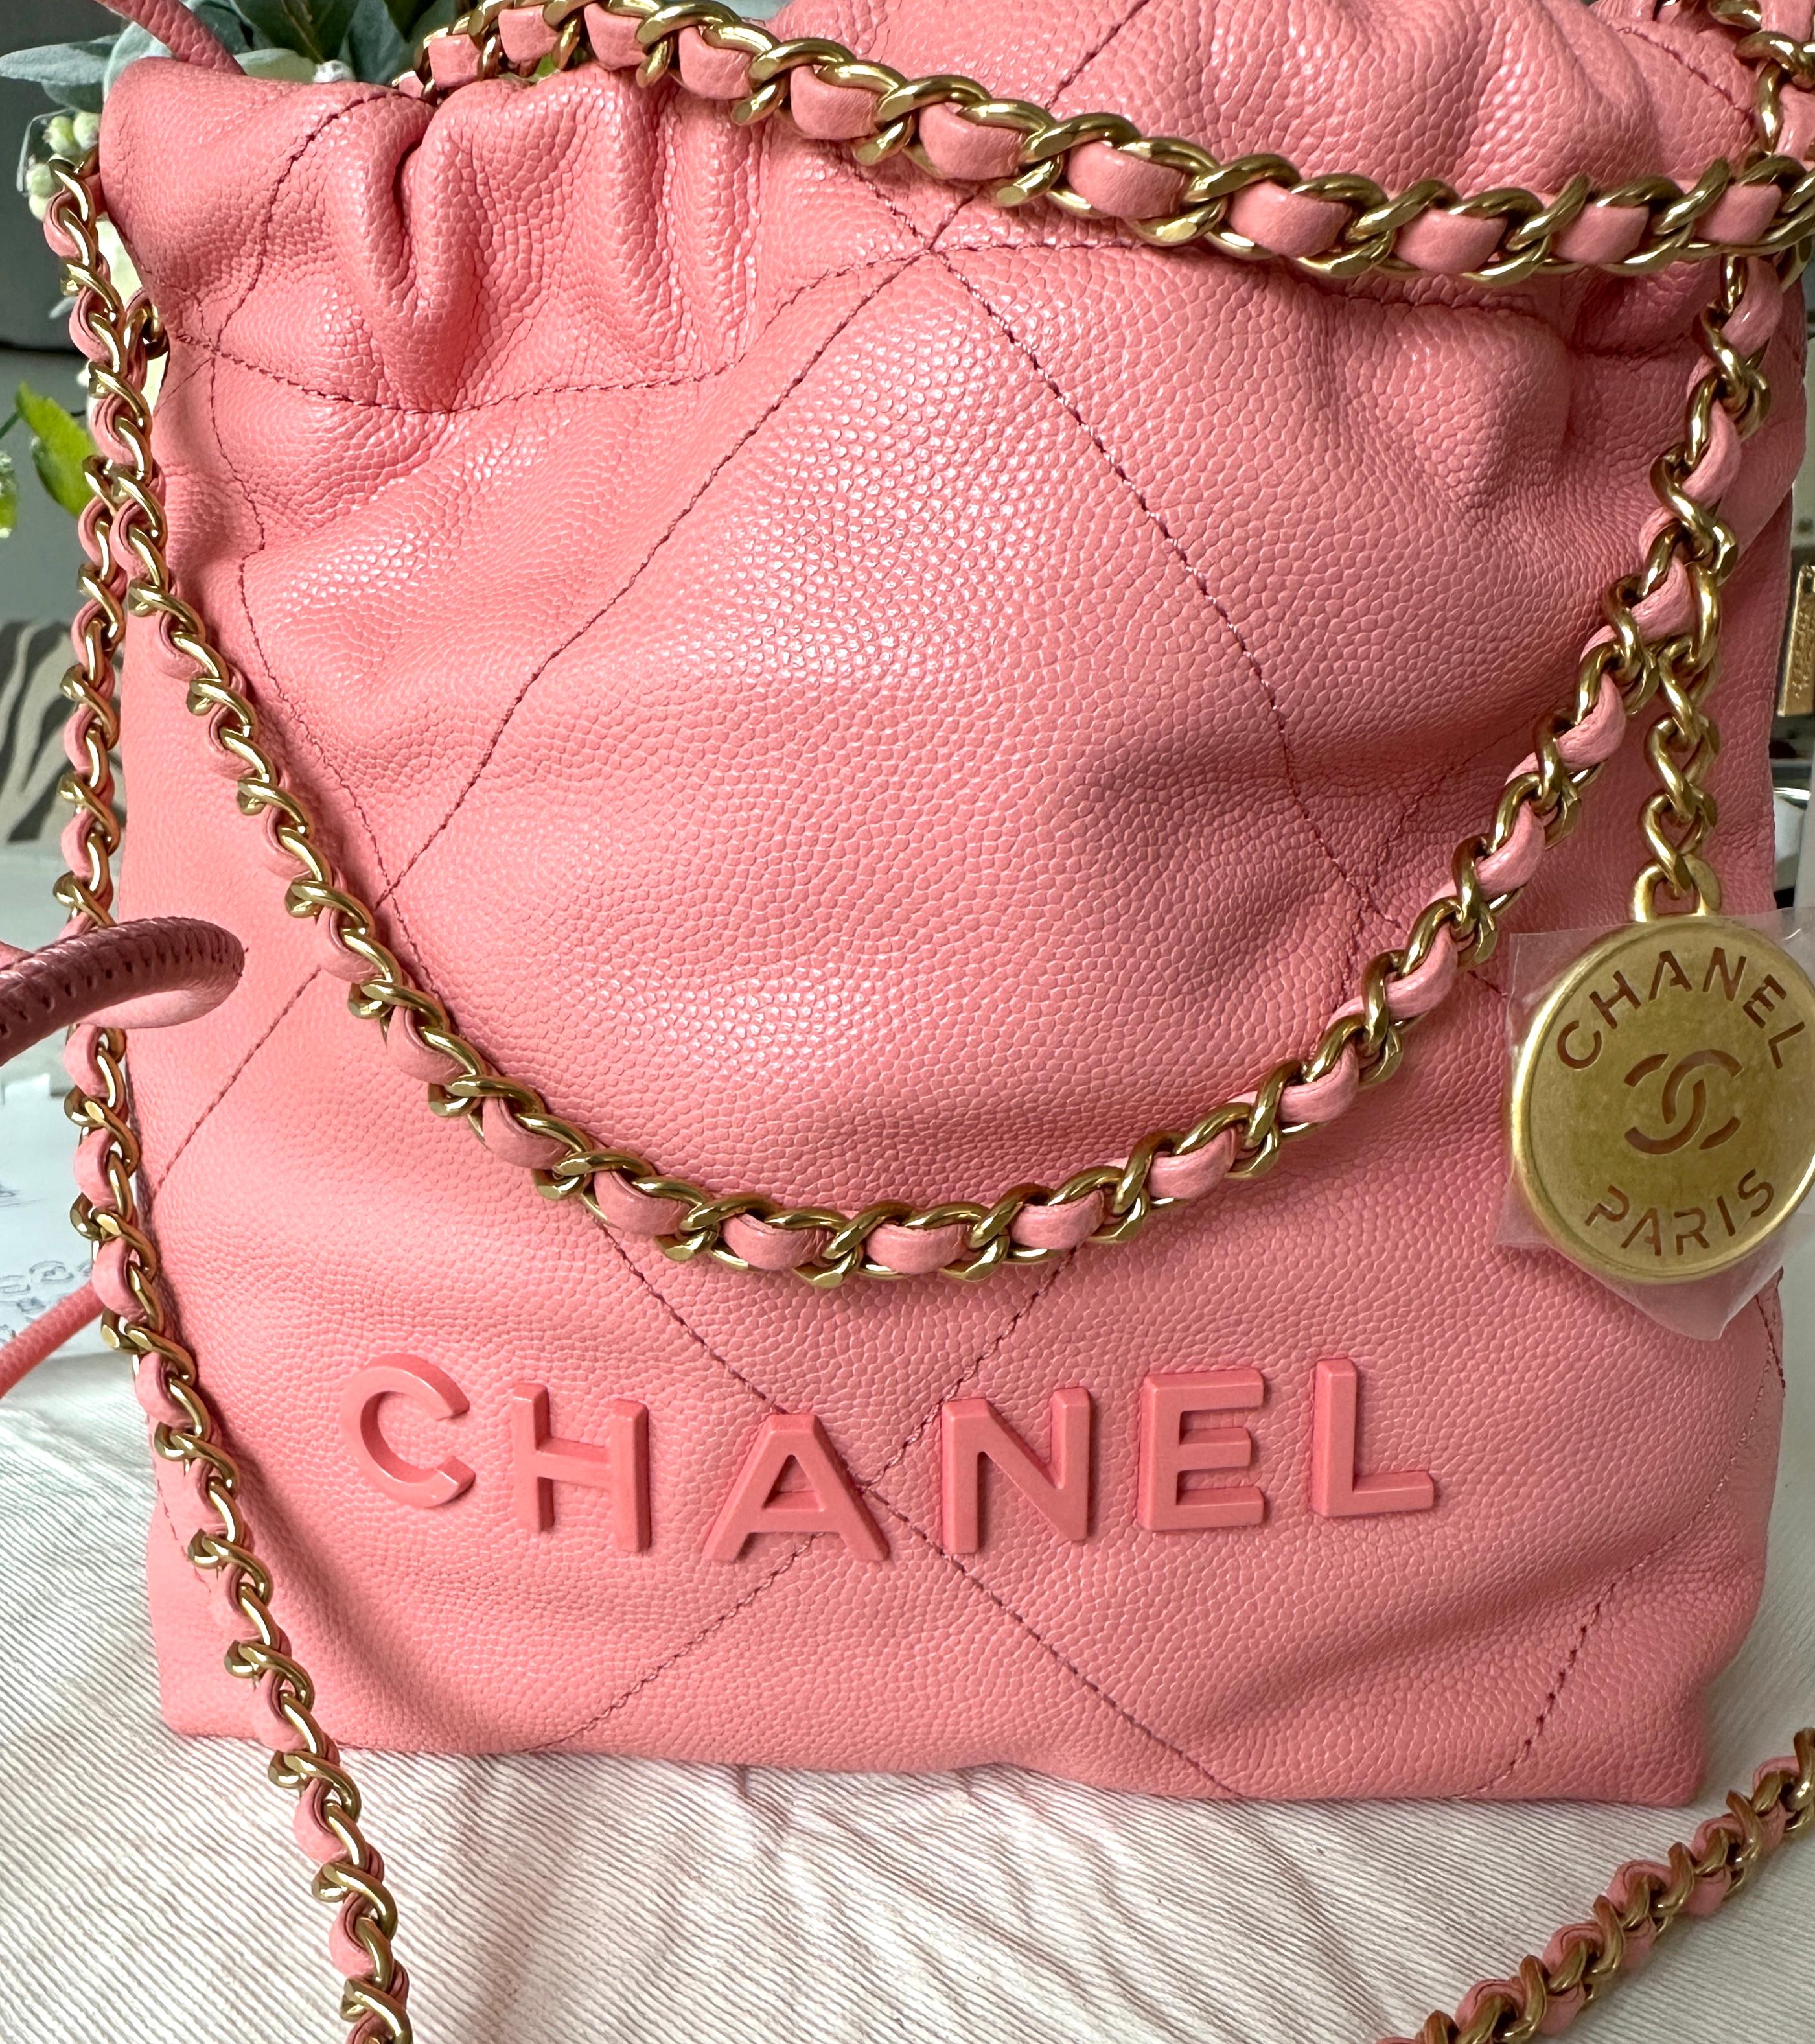 CHANEL 22 Mini Handbag Pink Coral Goldtone NEW For Sale 7